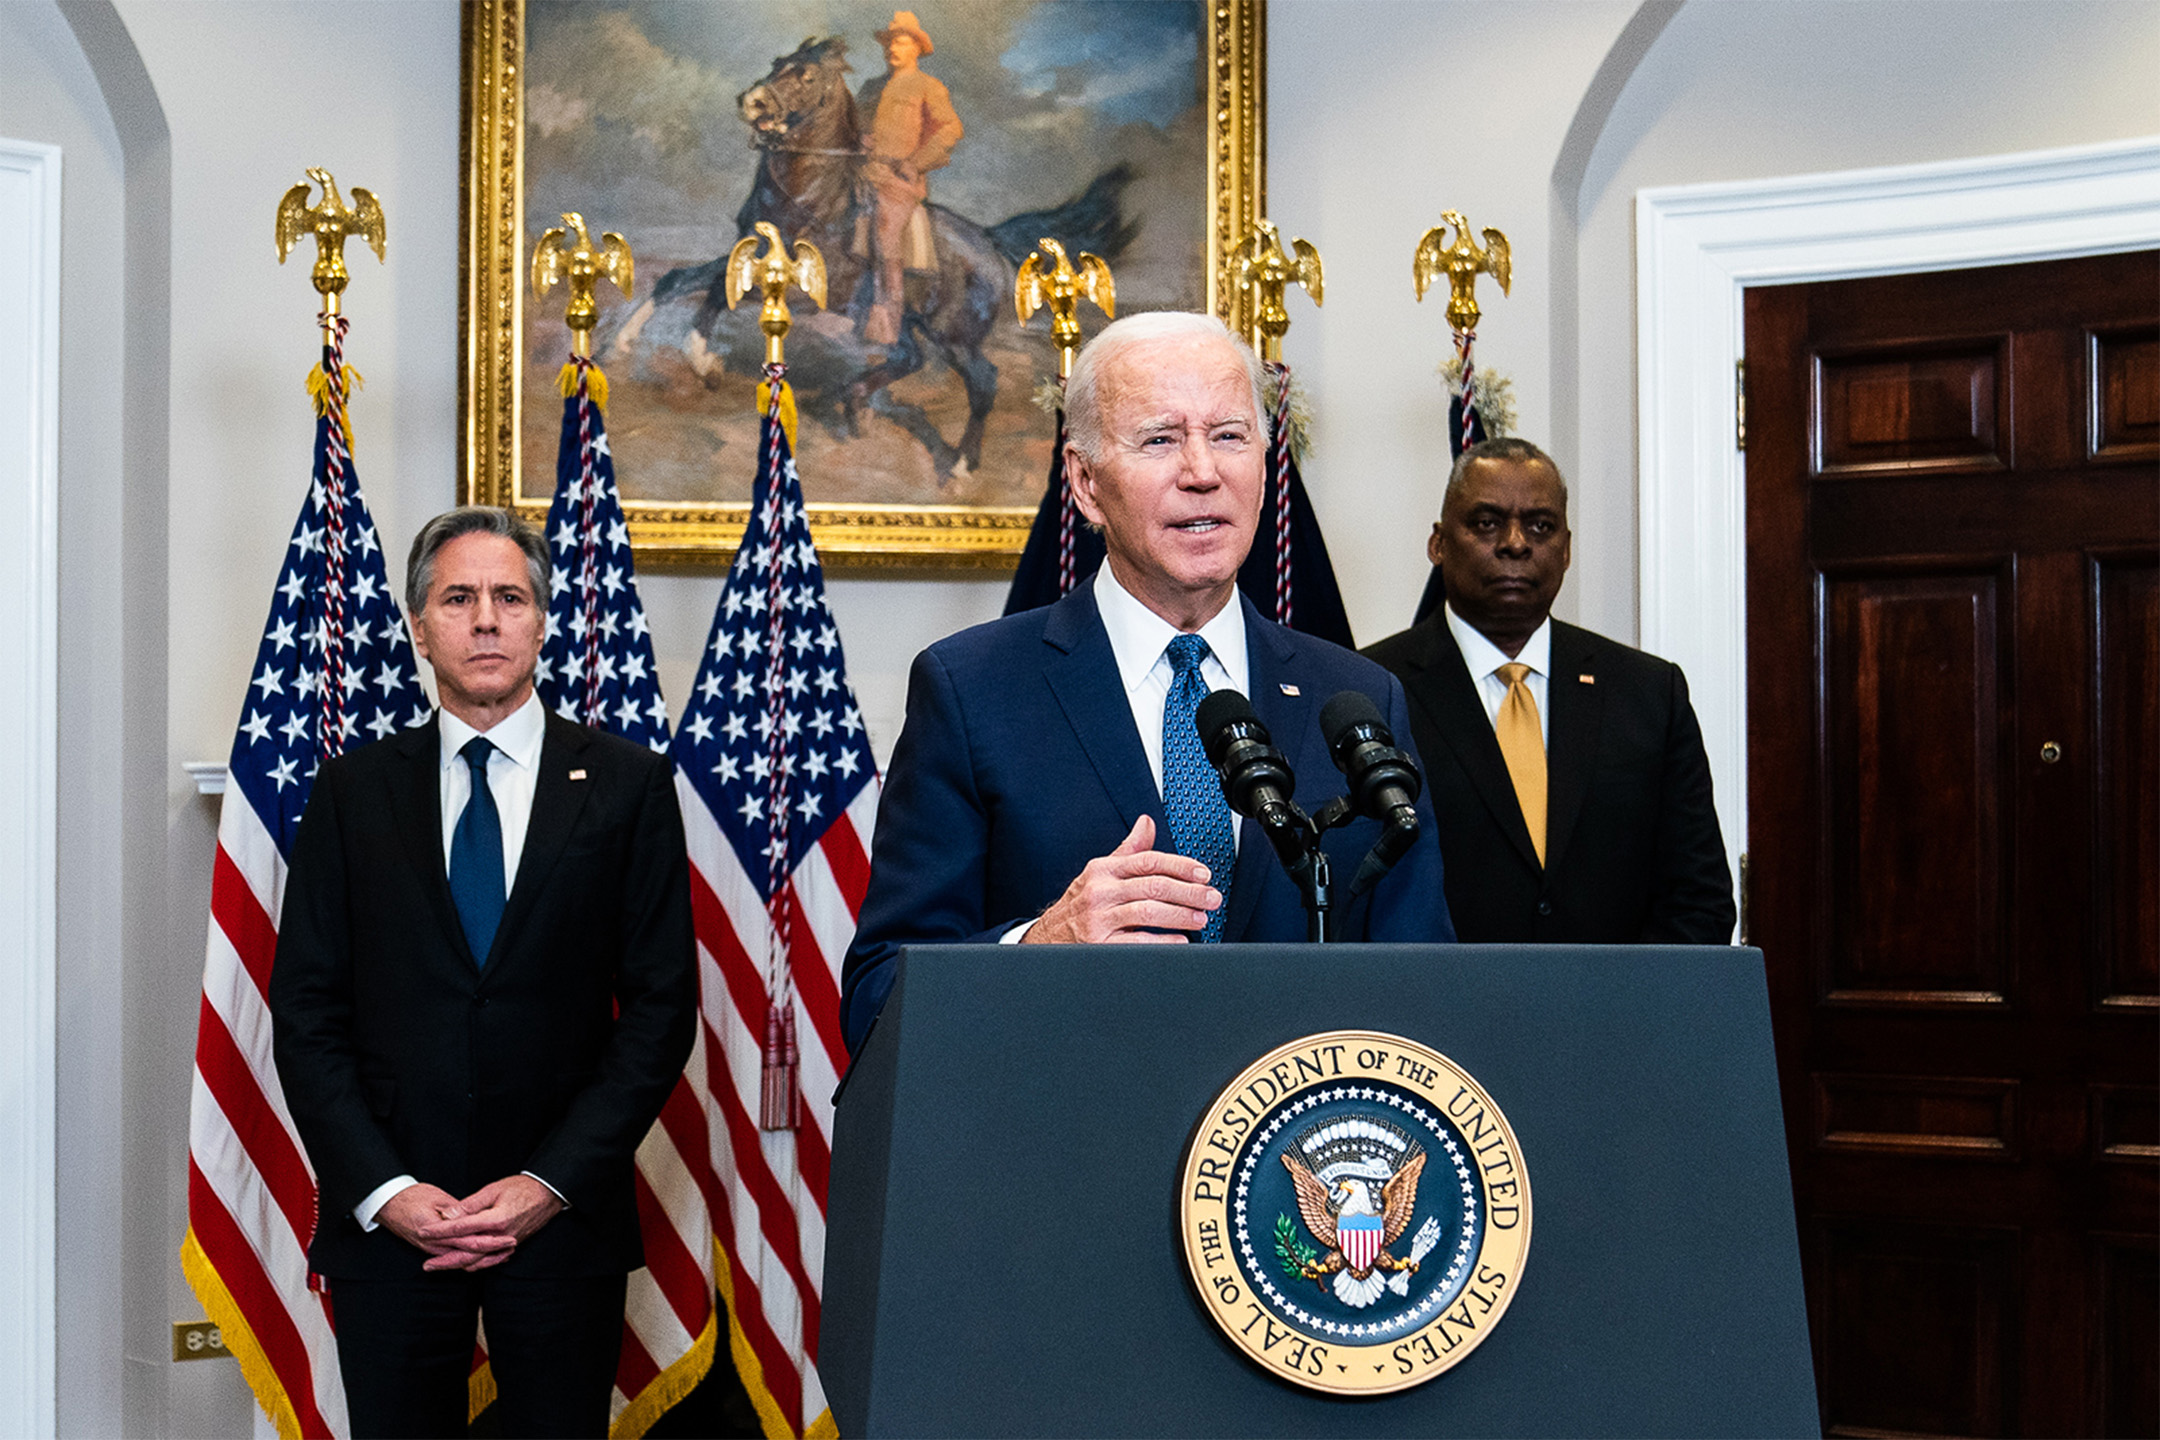 Biden addressing press and public